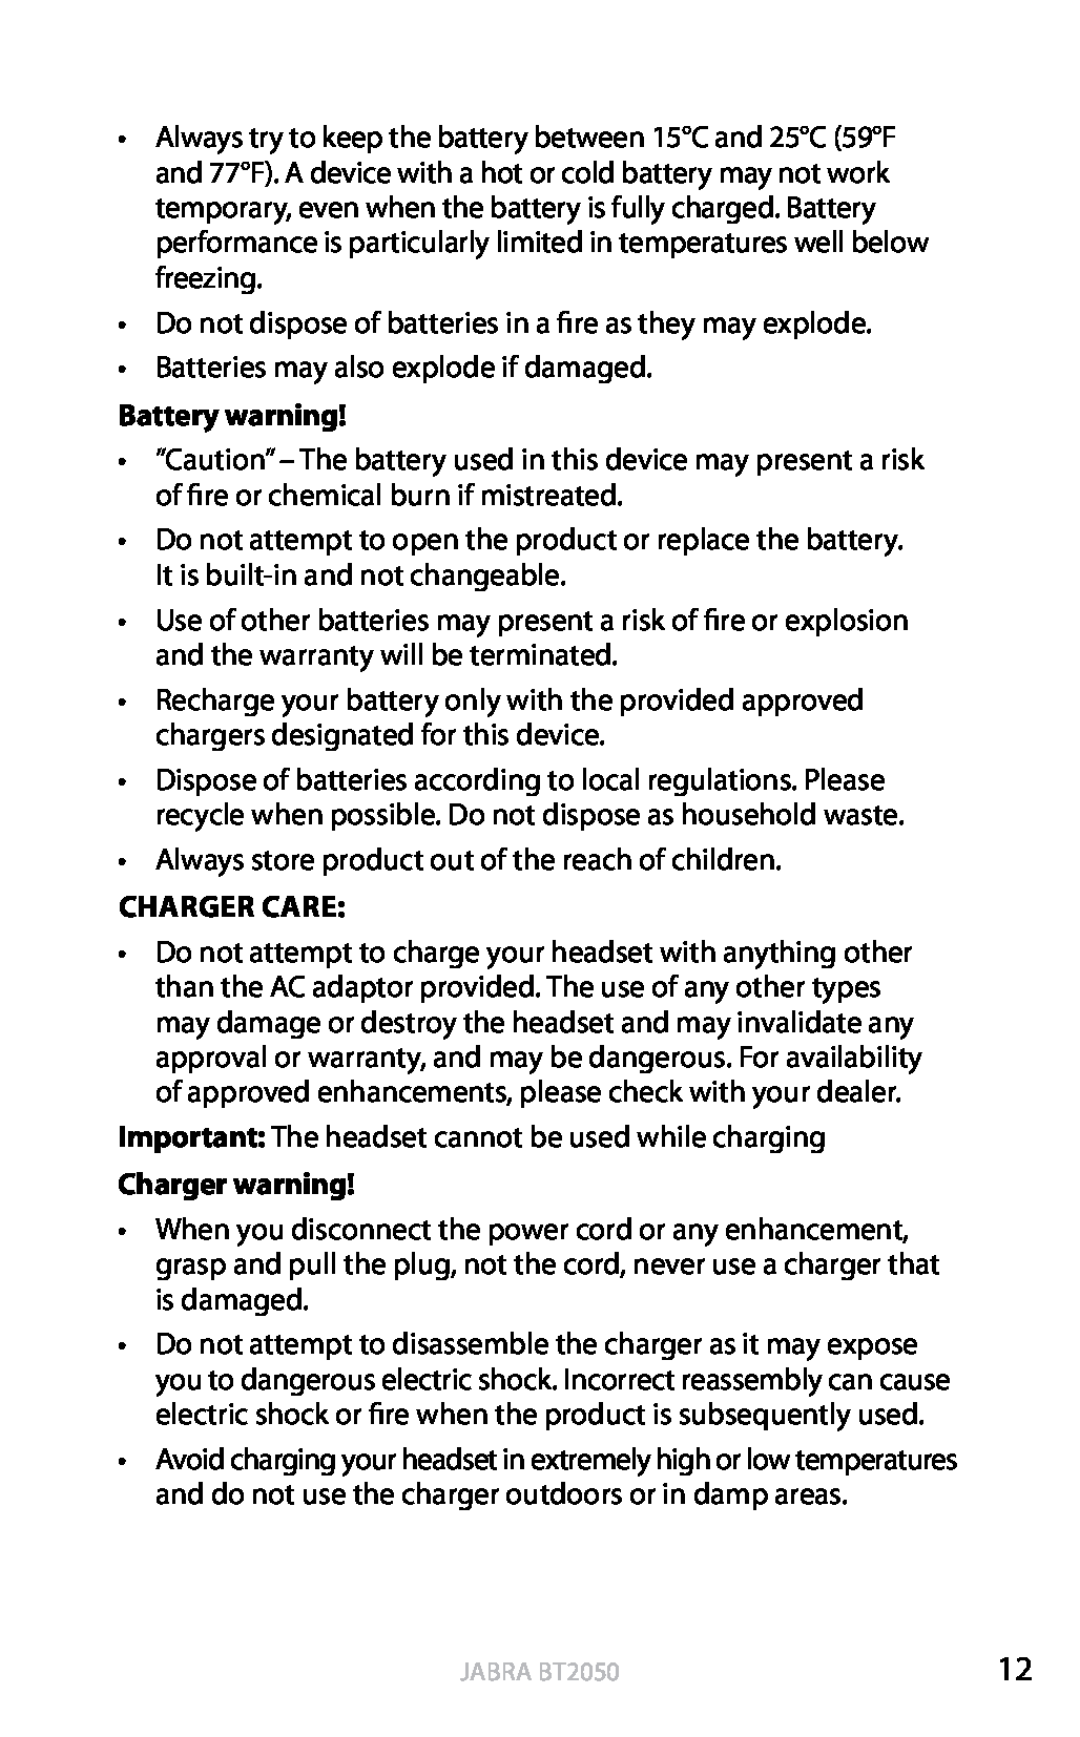 Jabra BT2050 user manual Battery warning, Charger Care, Charger warning, english 